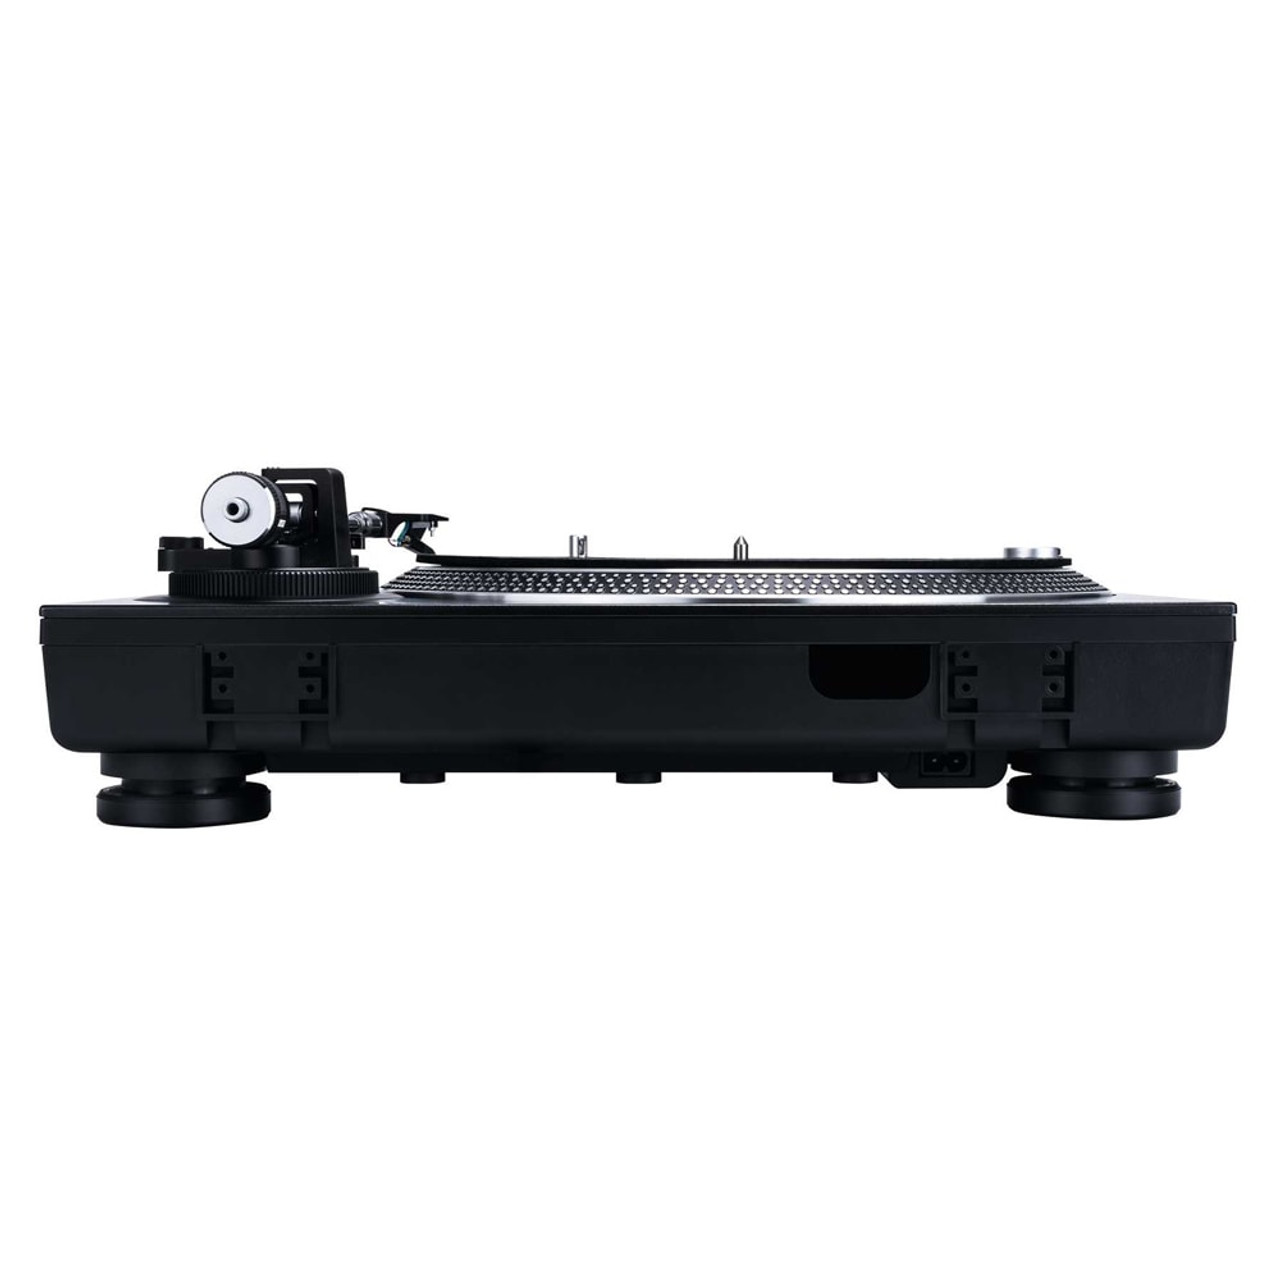 Reloop RP-4000 mk2 Direct Drive Scratch DJ Turntable - Black